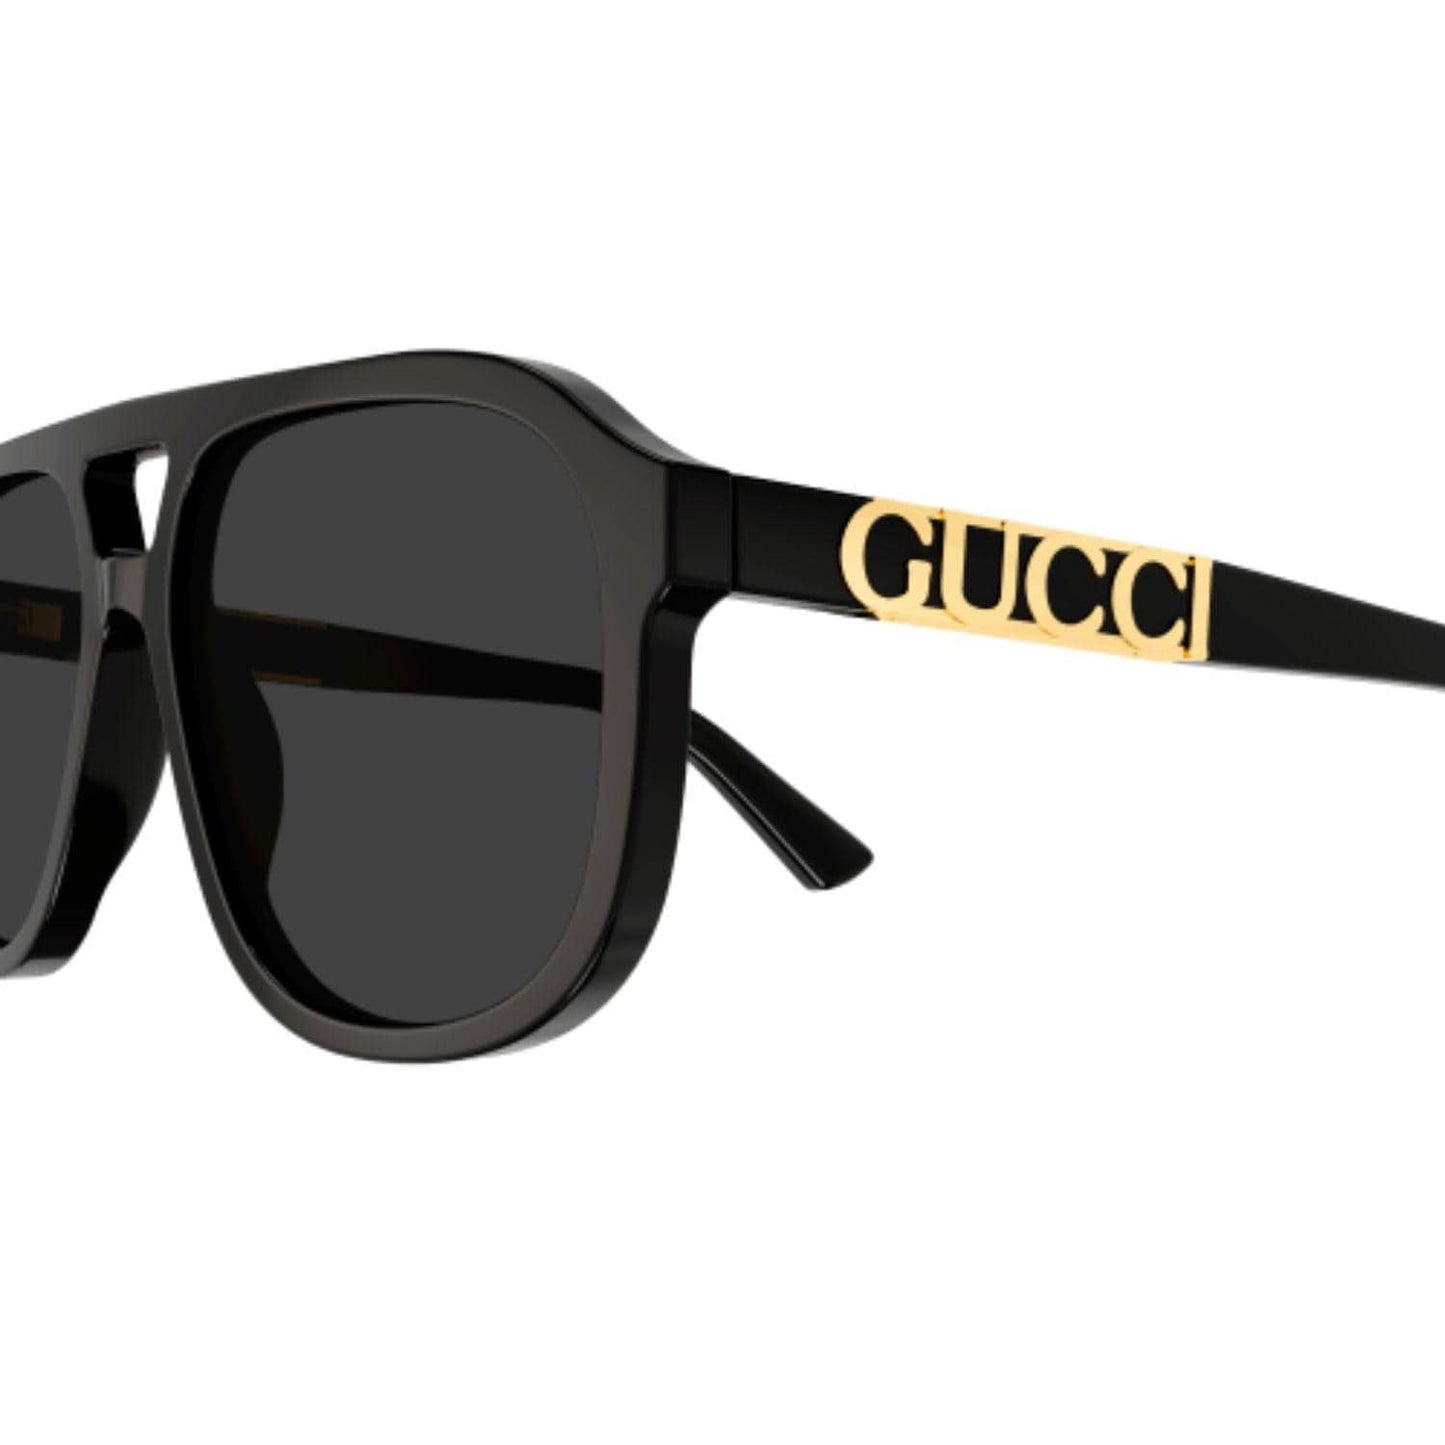 Gucci - GG1188S-001 - oculosopticaonline